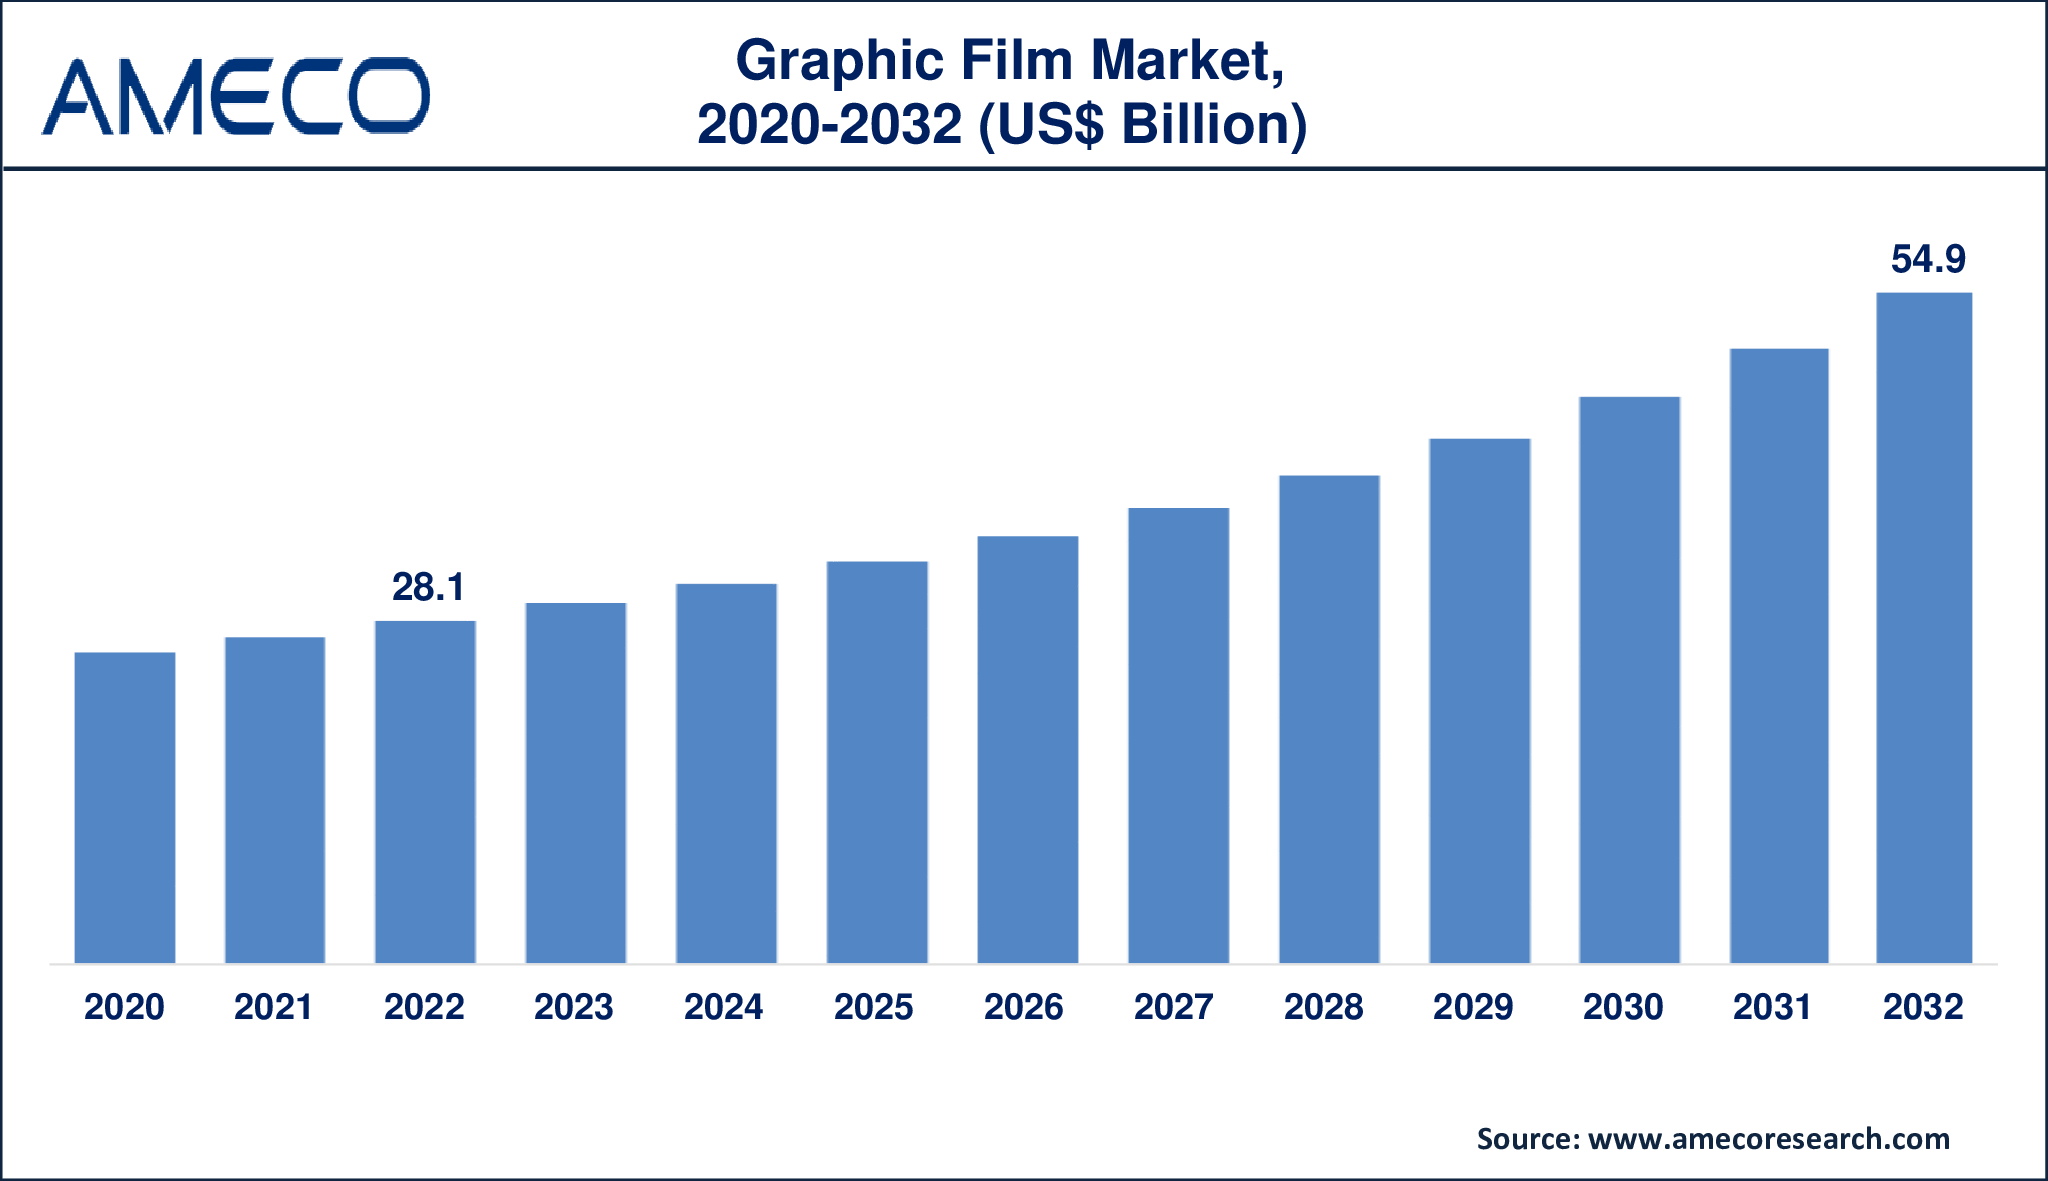 Graphic Film Market Dynamics